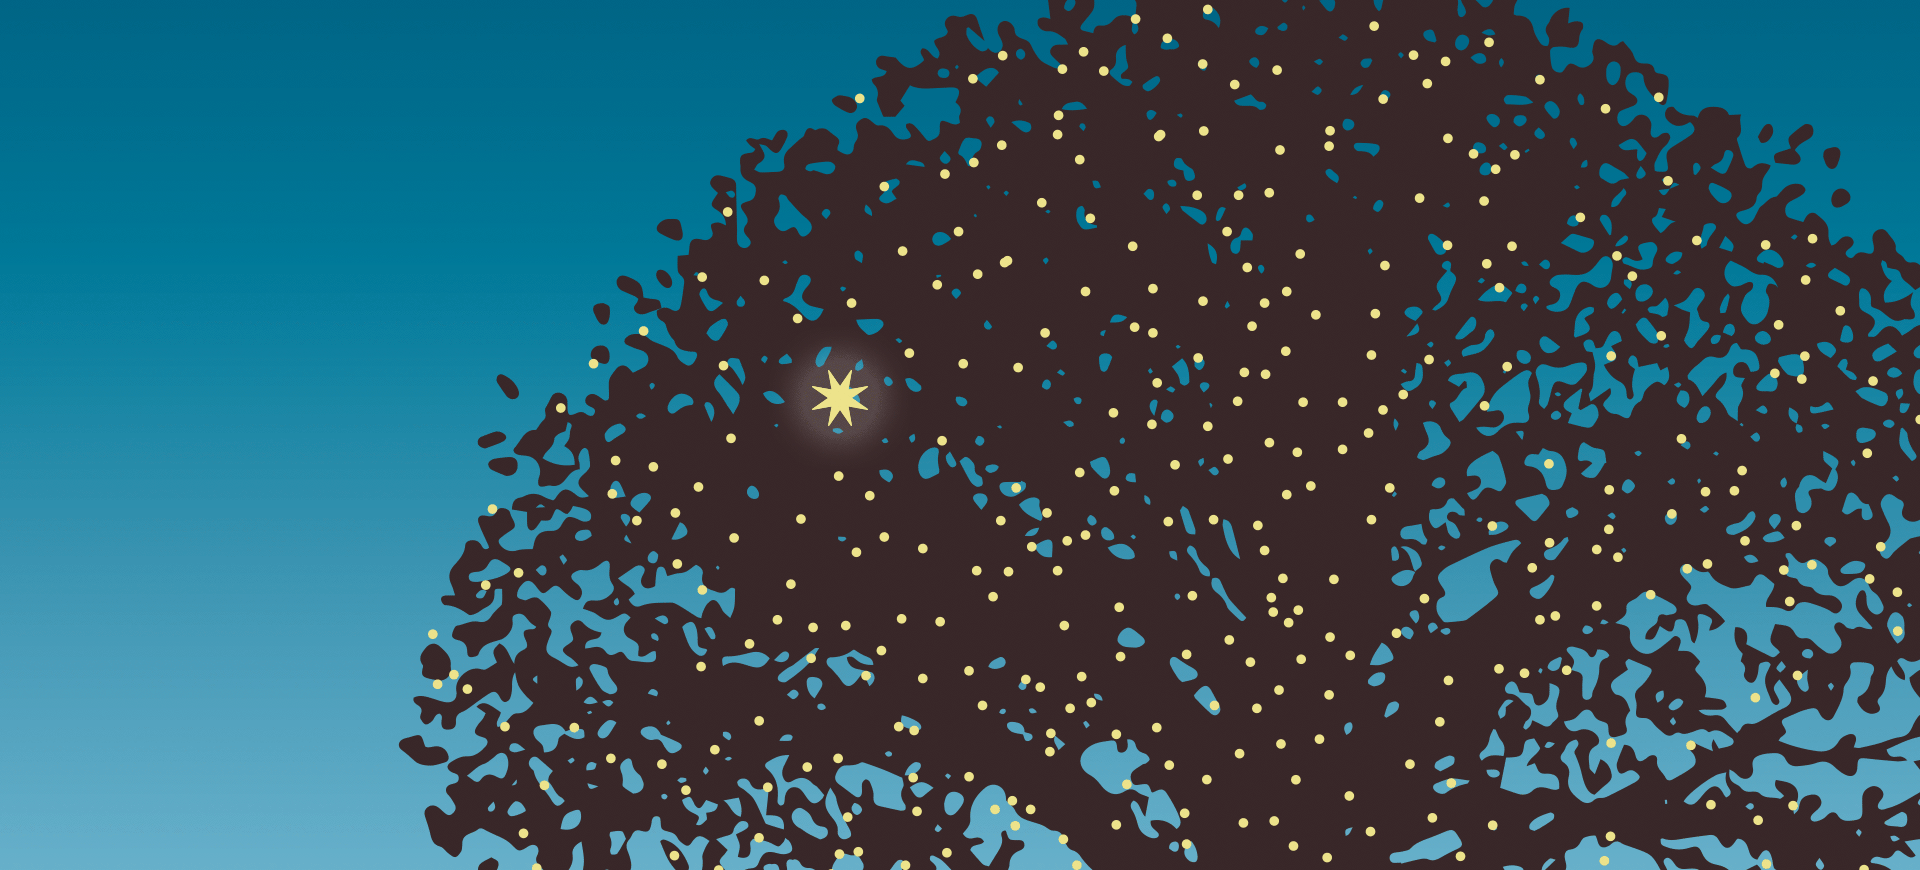 Tree of Lights animated